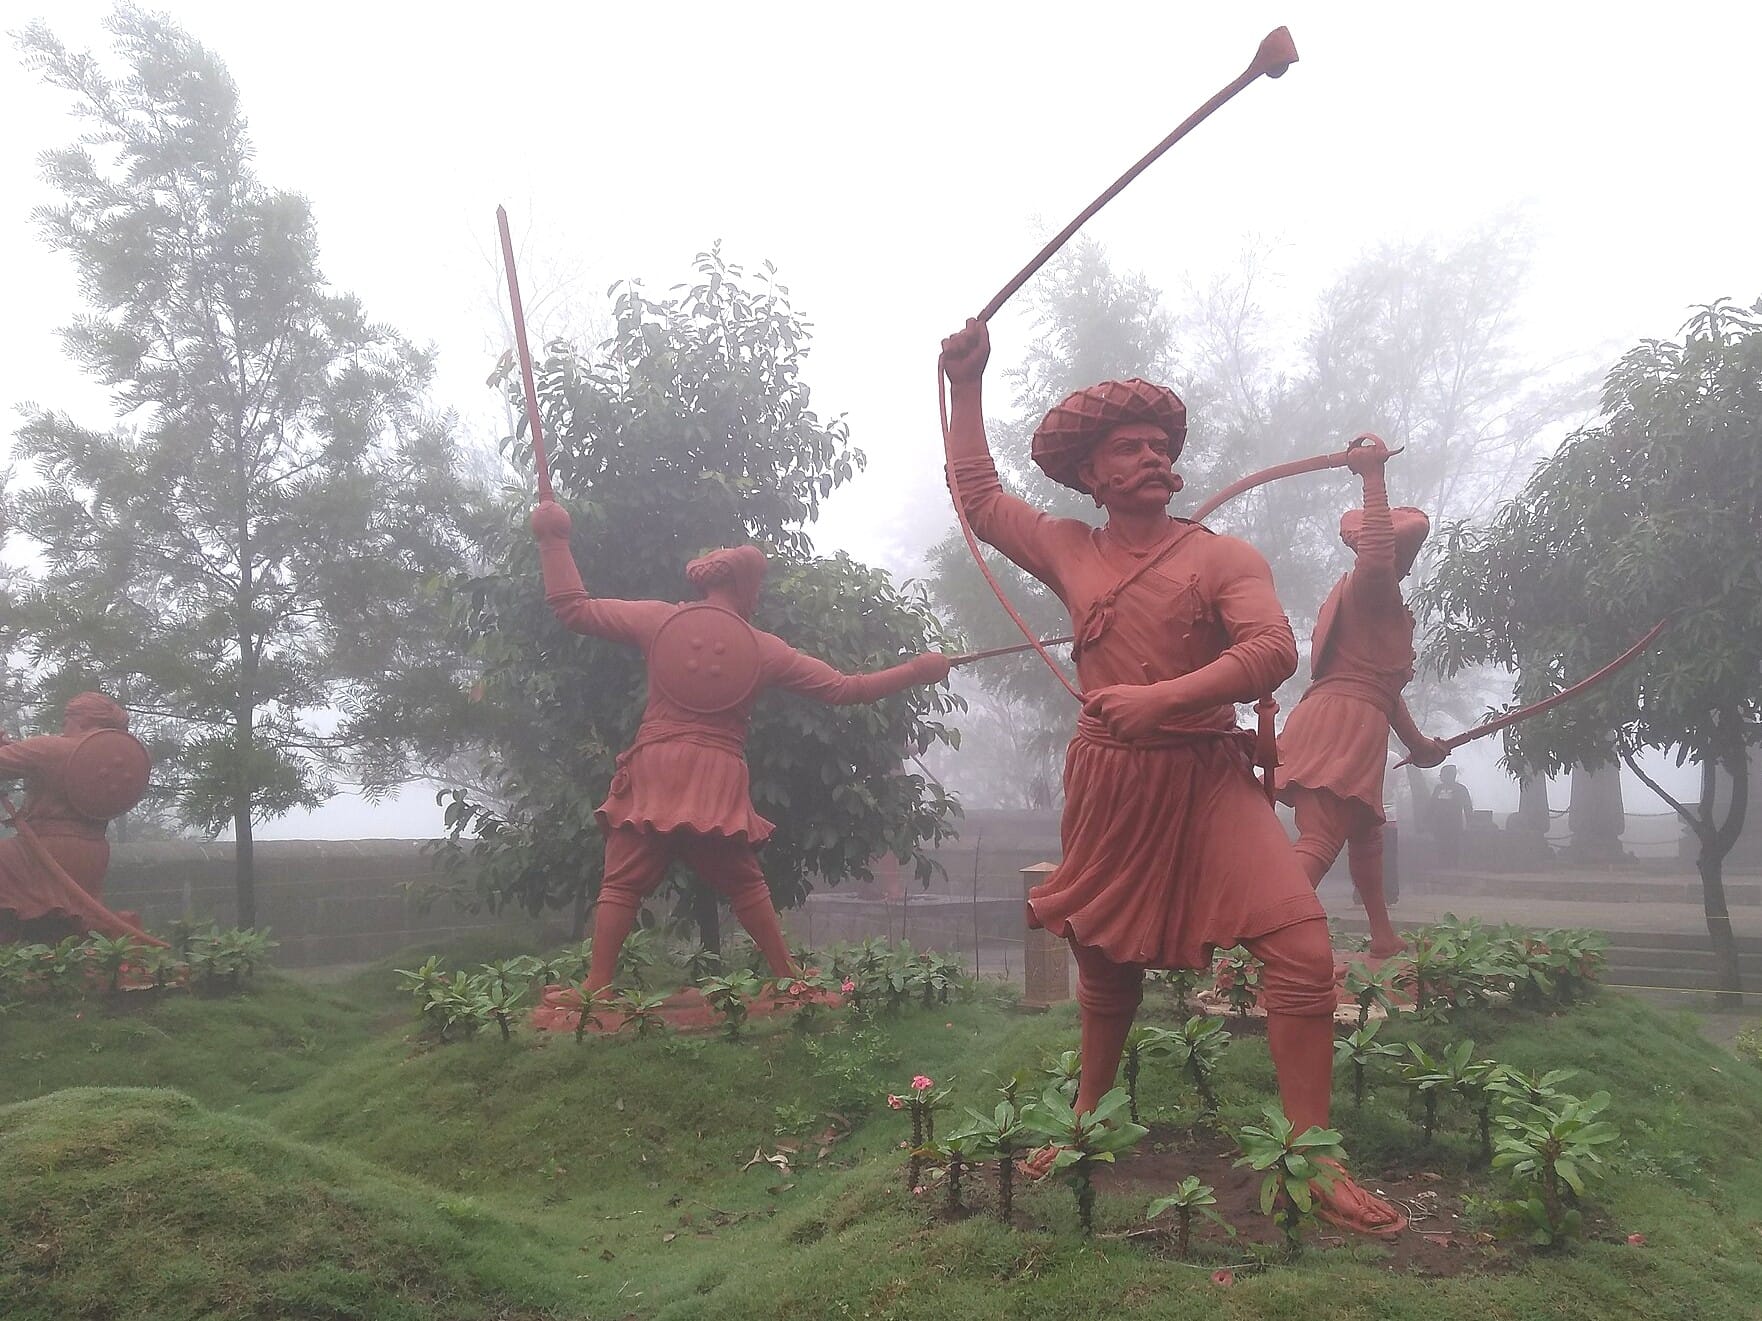 Statues of Tanaji Malusare and his Companions at Sinhagad depicting Campaign of Kondhana